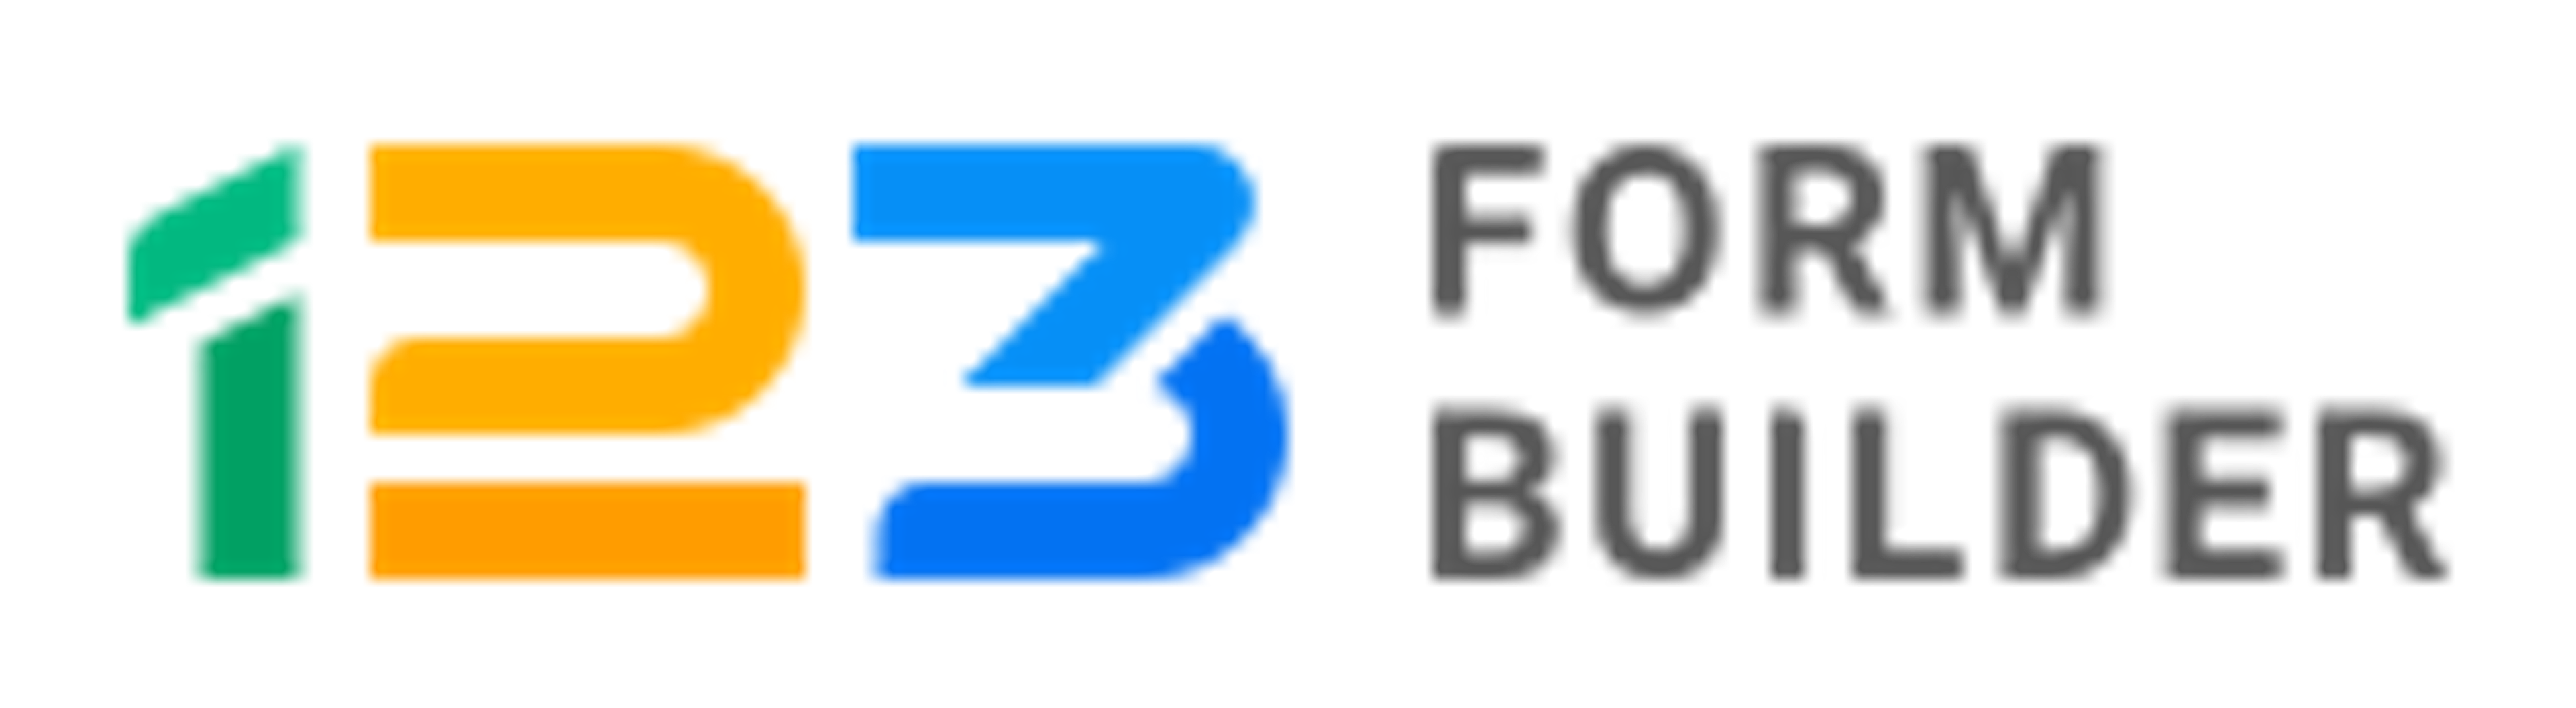 123FormBuilder Logo